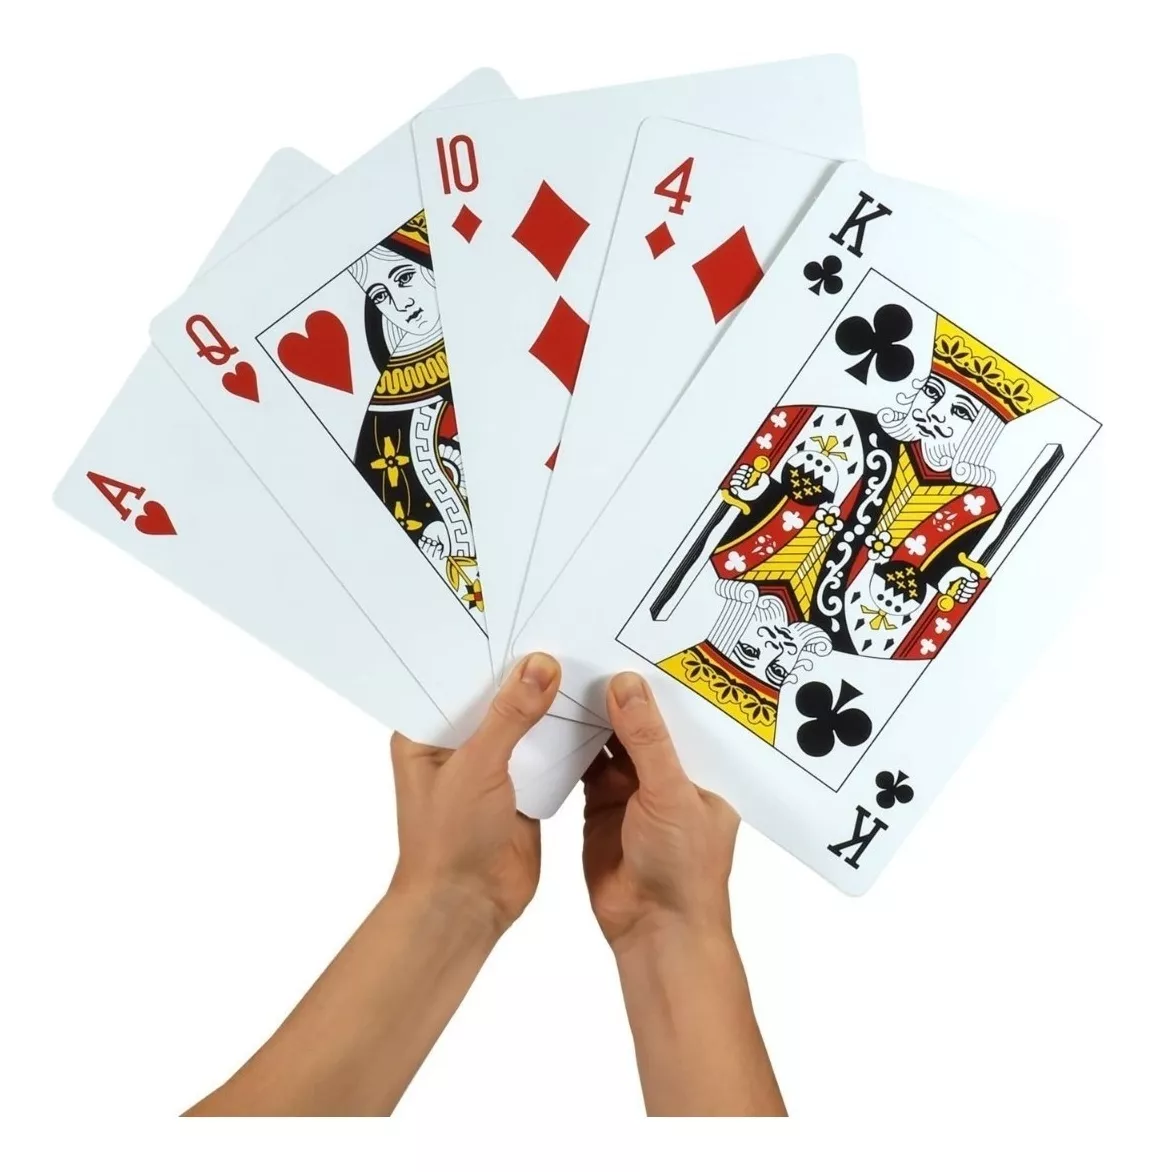 Tercera imagen para búsqueda de cartas poker